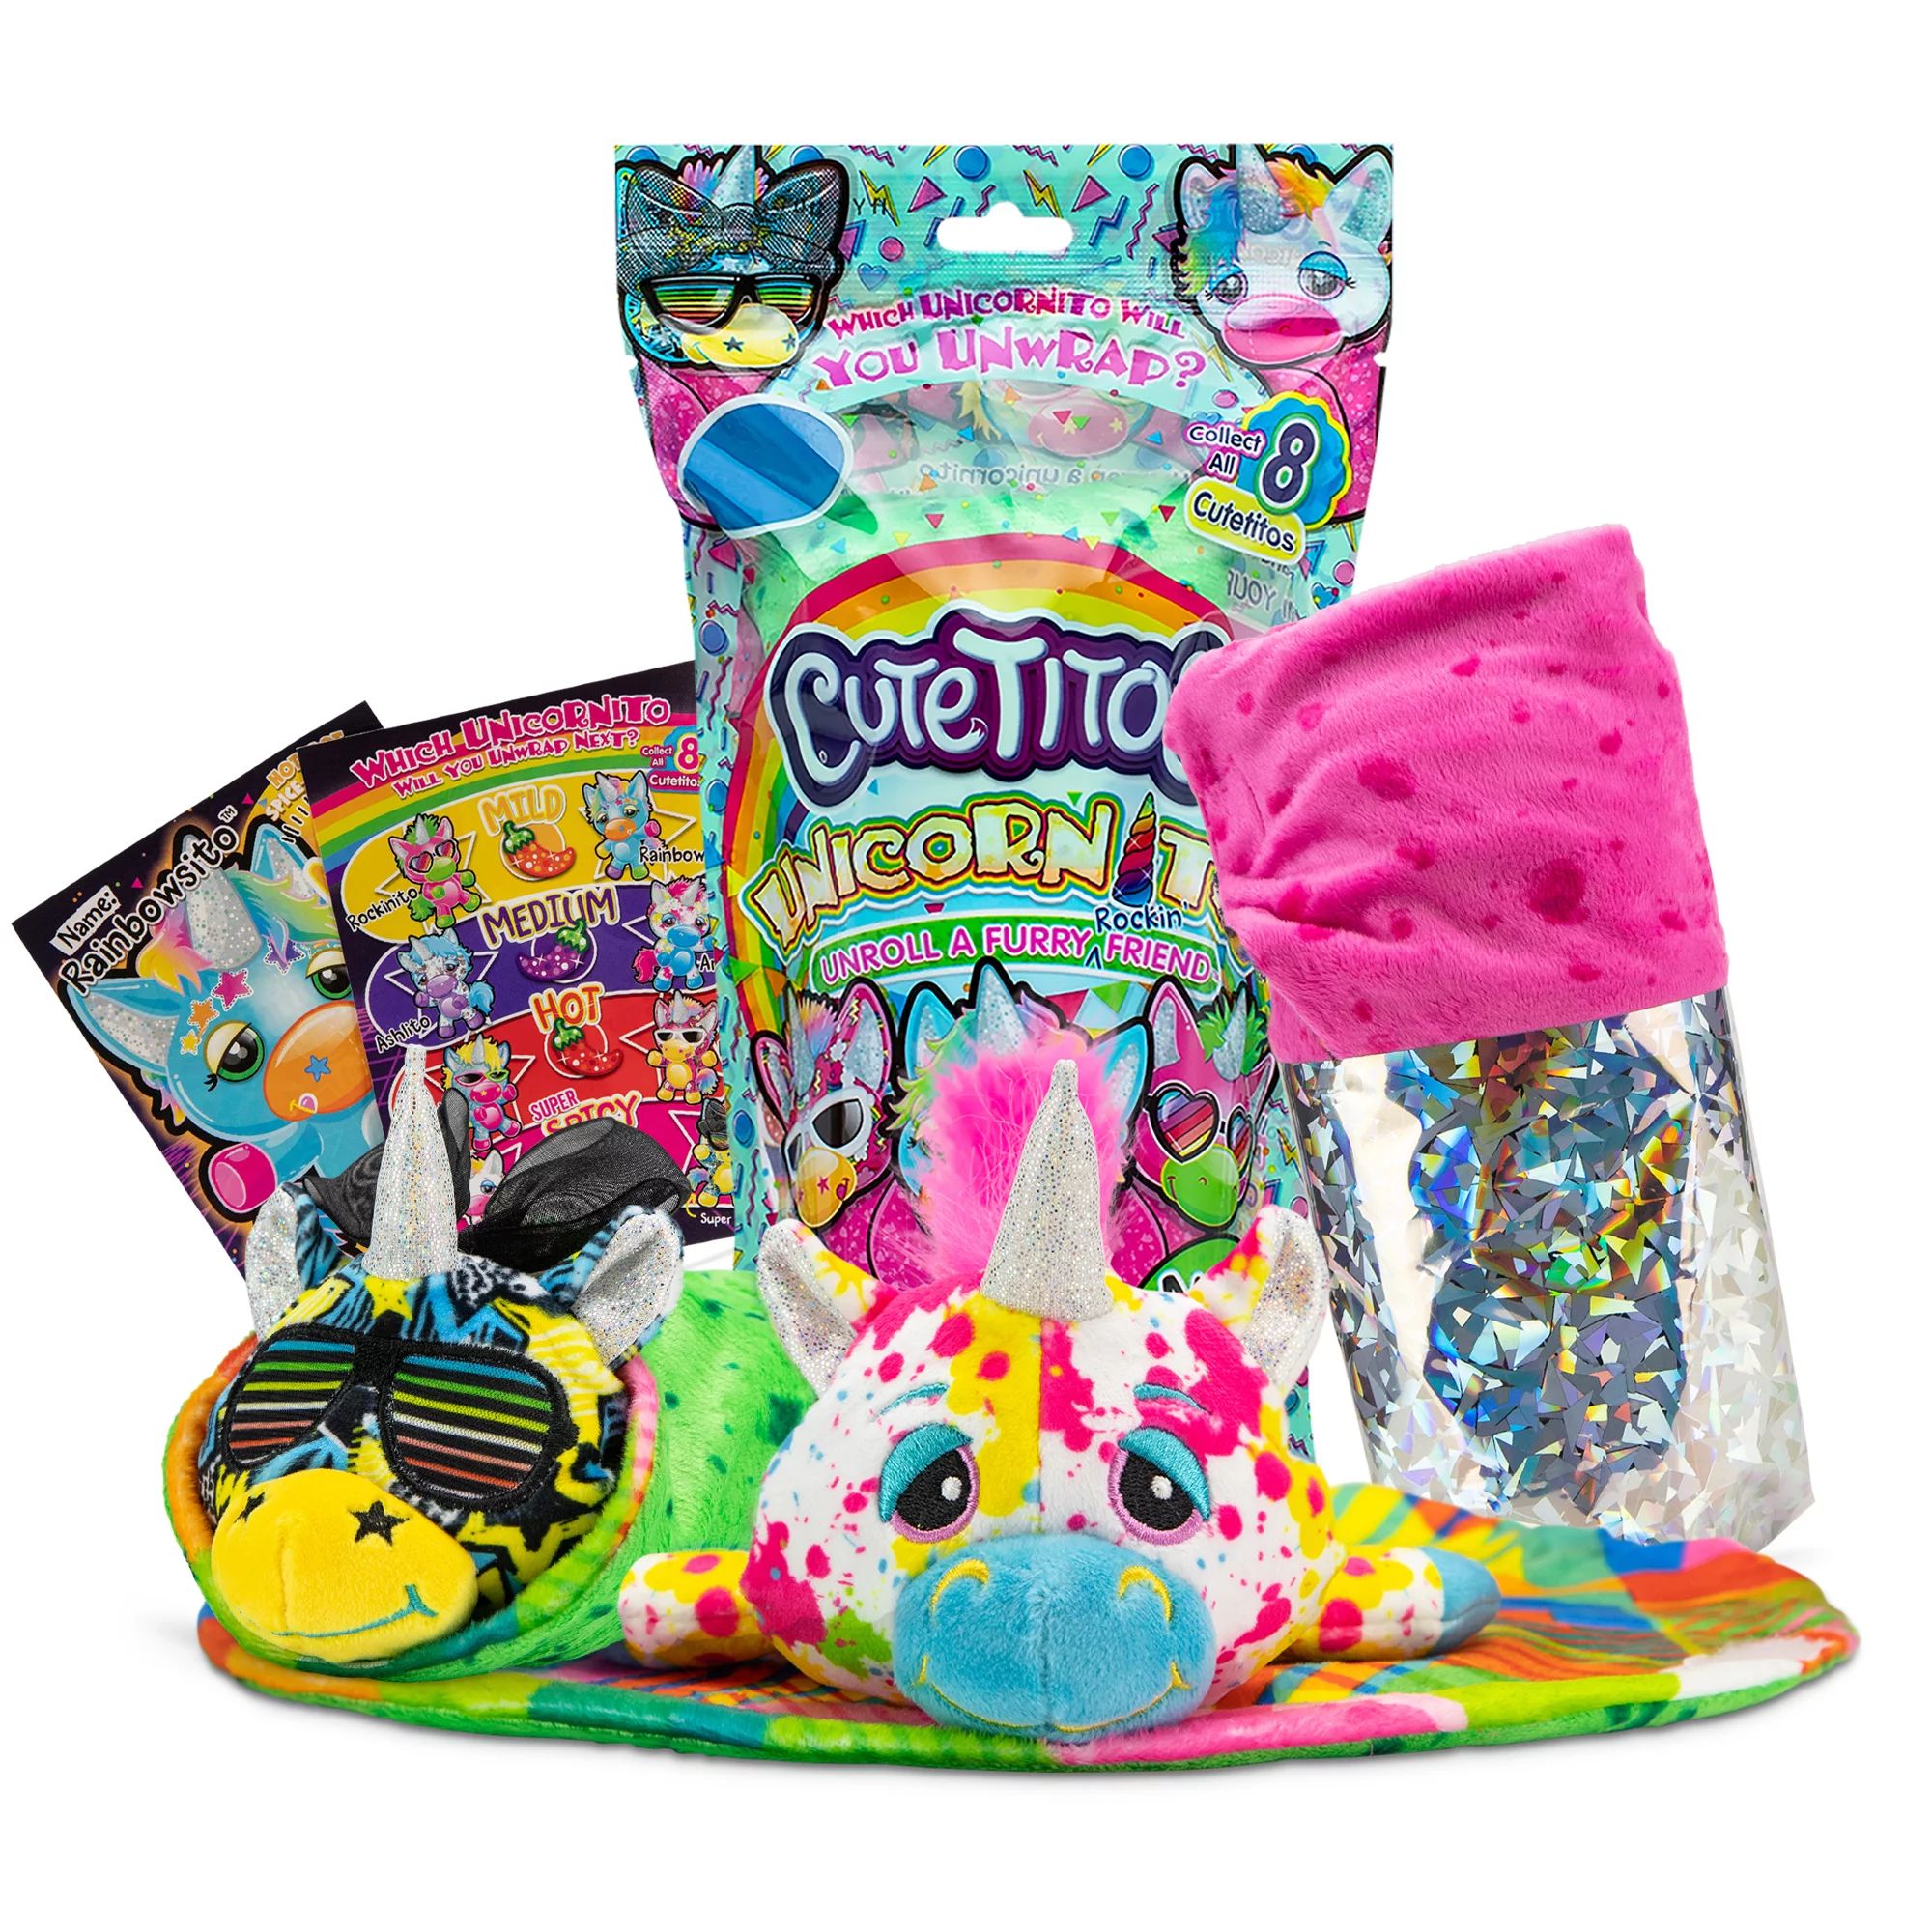 Cutetitos Unicornitos - Surprise Stuffed Animals - Collectible Plush Unicorns (Styles May Vary) -... | Walmart (US)